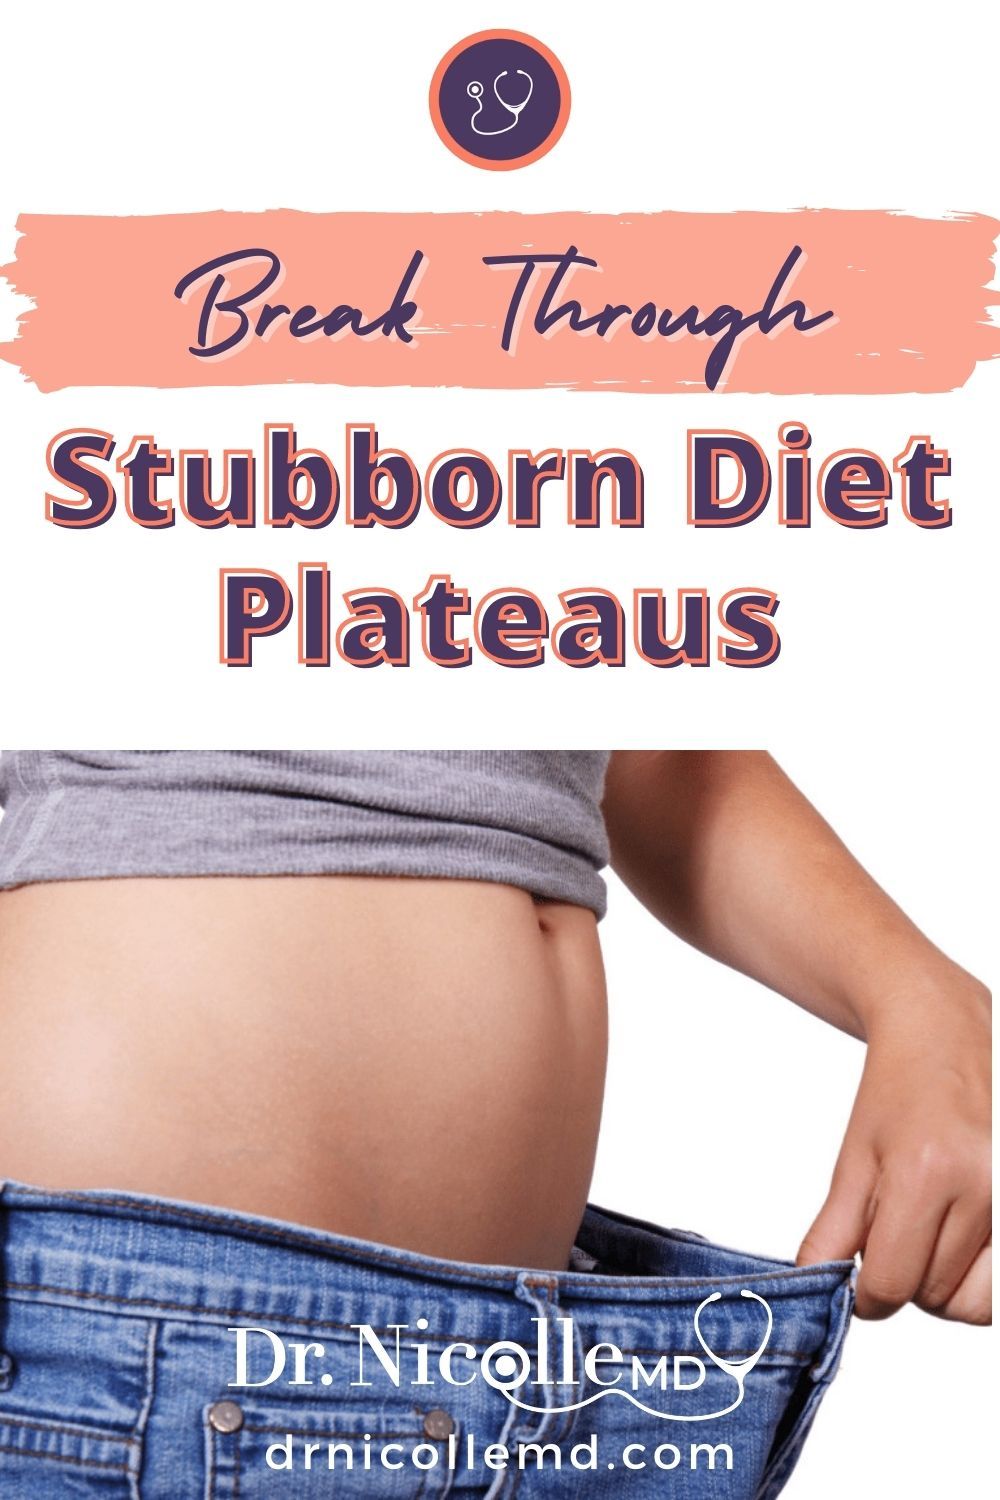 Break Through Stubborn Diet Plateaus